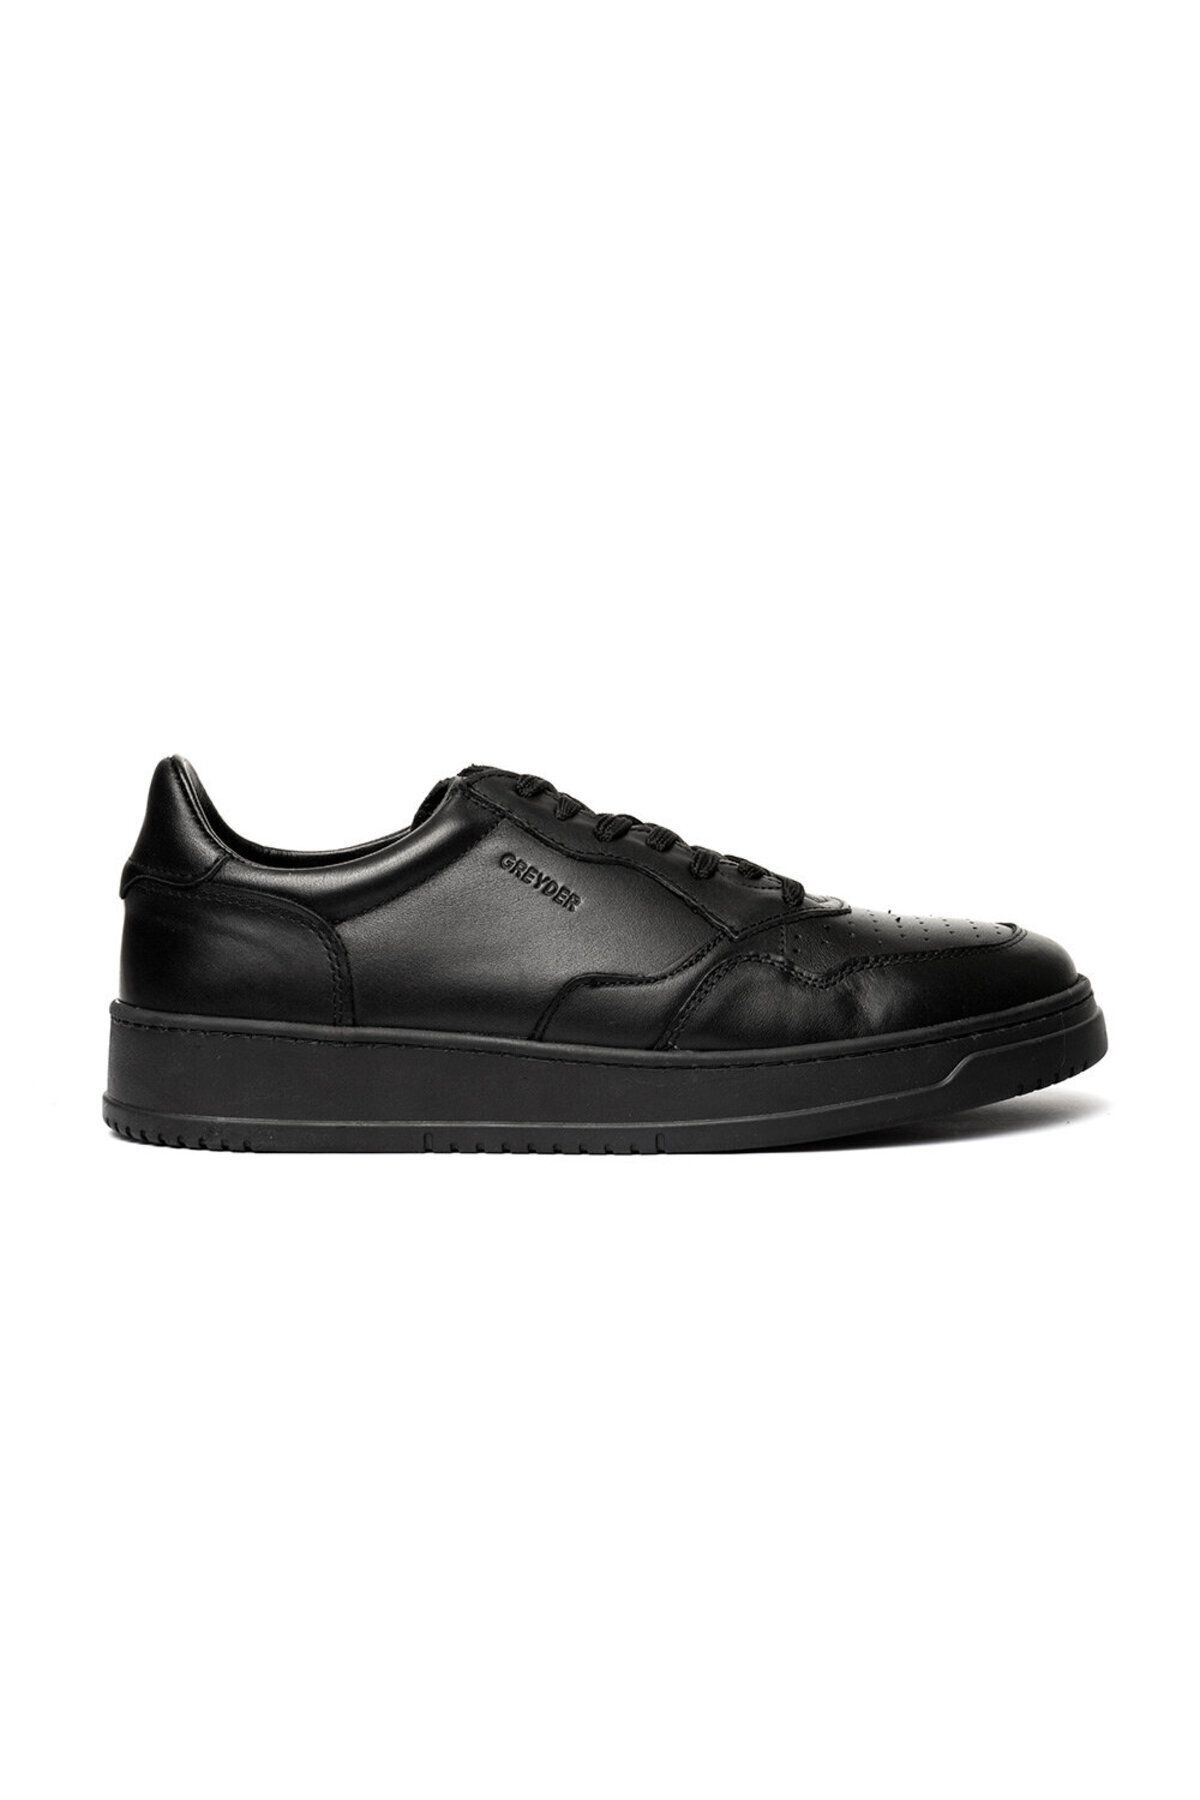 Greyder Erkek Siyah Hakiki Deri Sneaker Ayakkabı 3k1sa62609